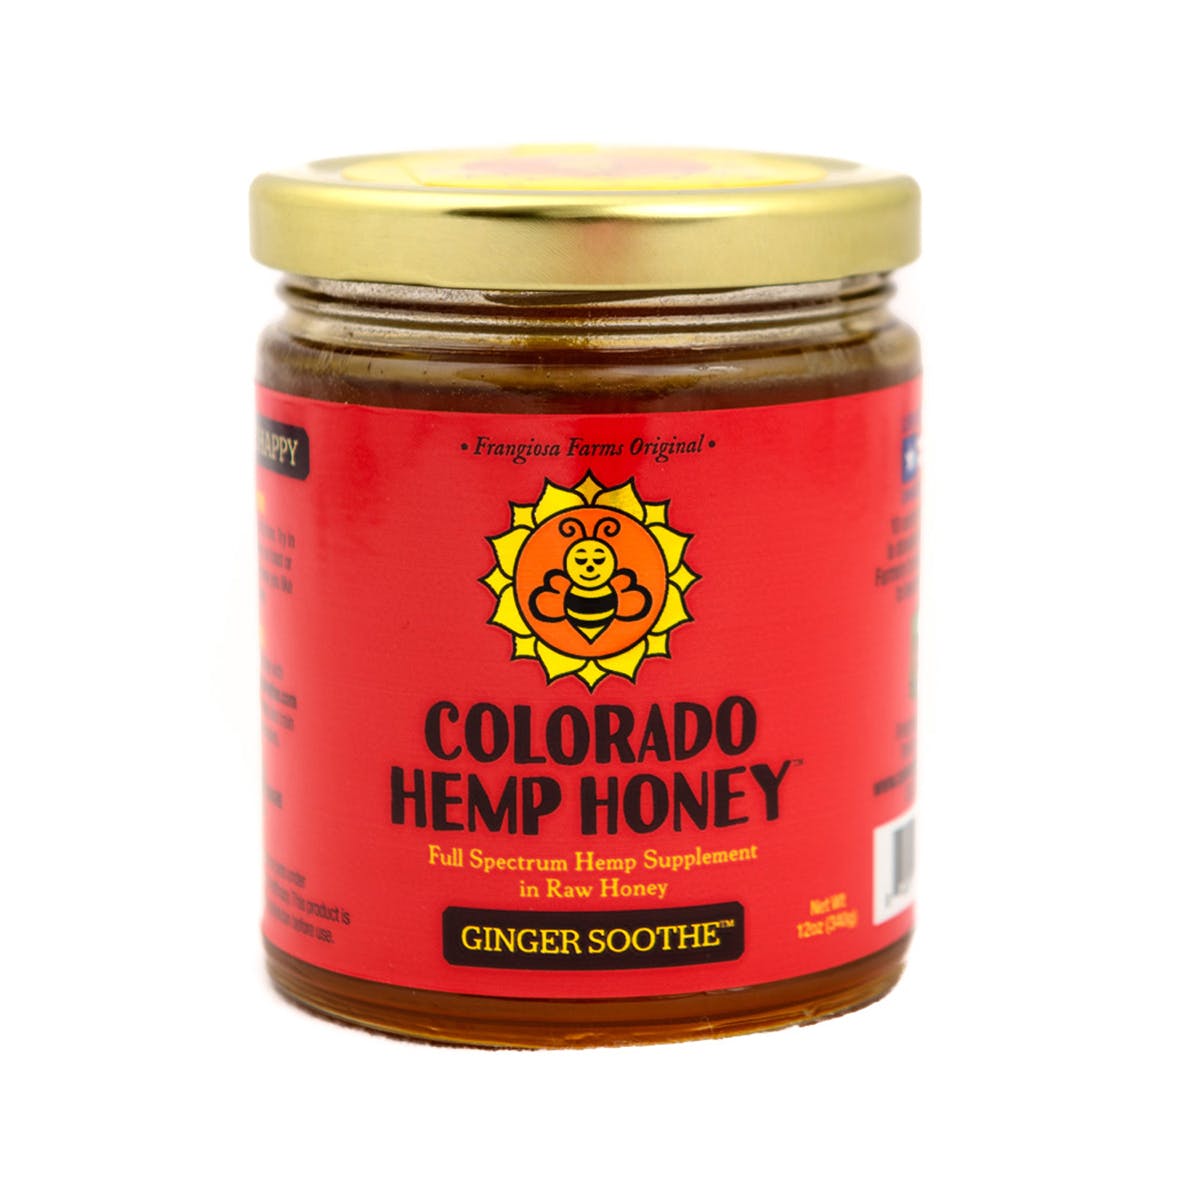 Colorado Hemp Honey Ginger Soothe